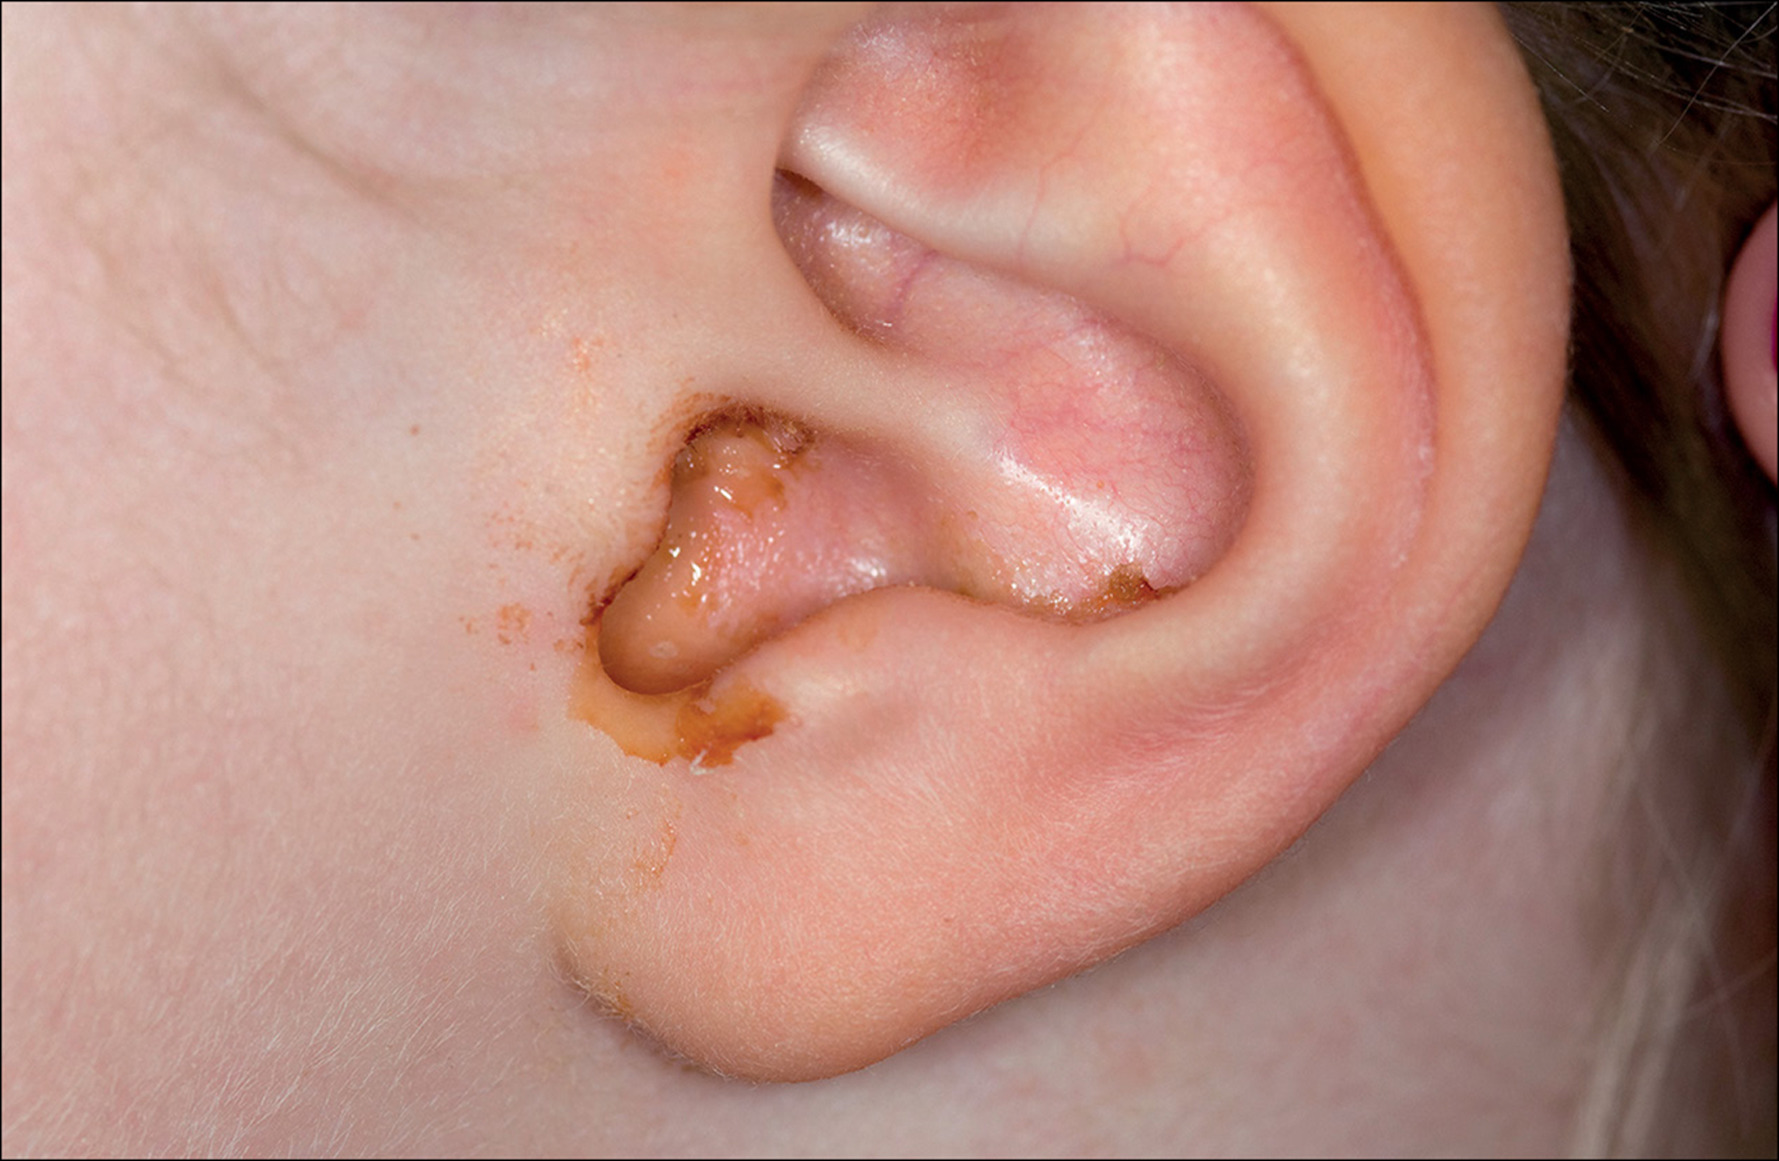 npj biofilms and microbiomes ： 研究人员开发出一种治疗中耳炎的新技术